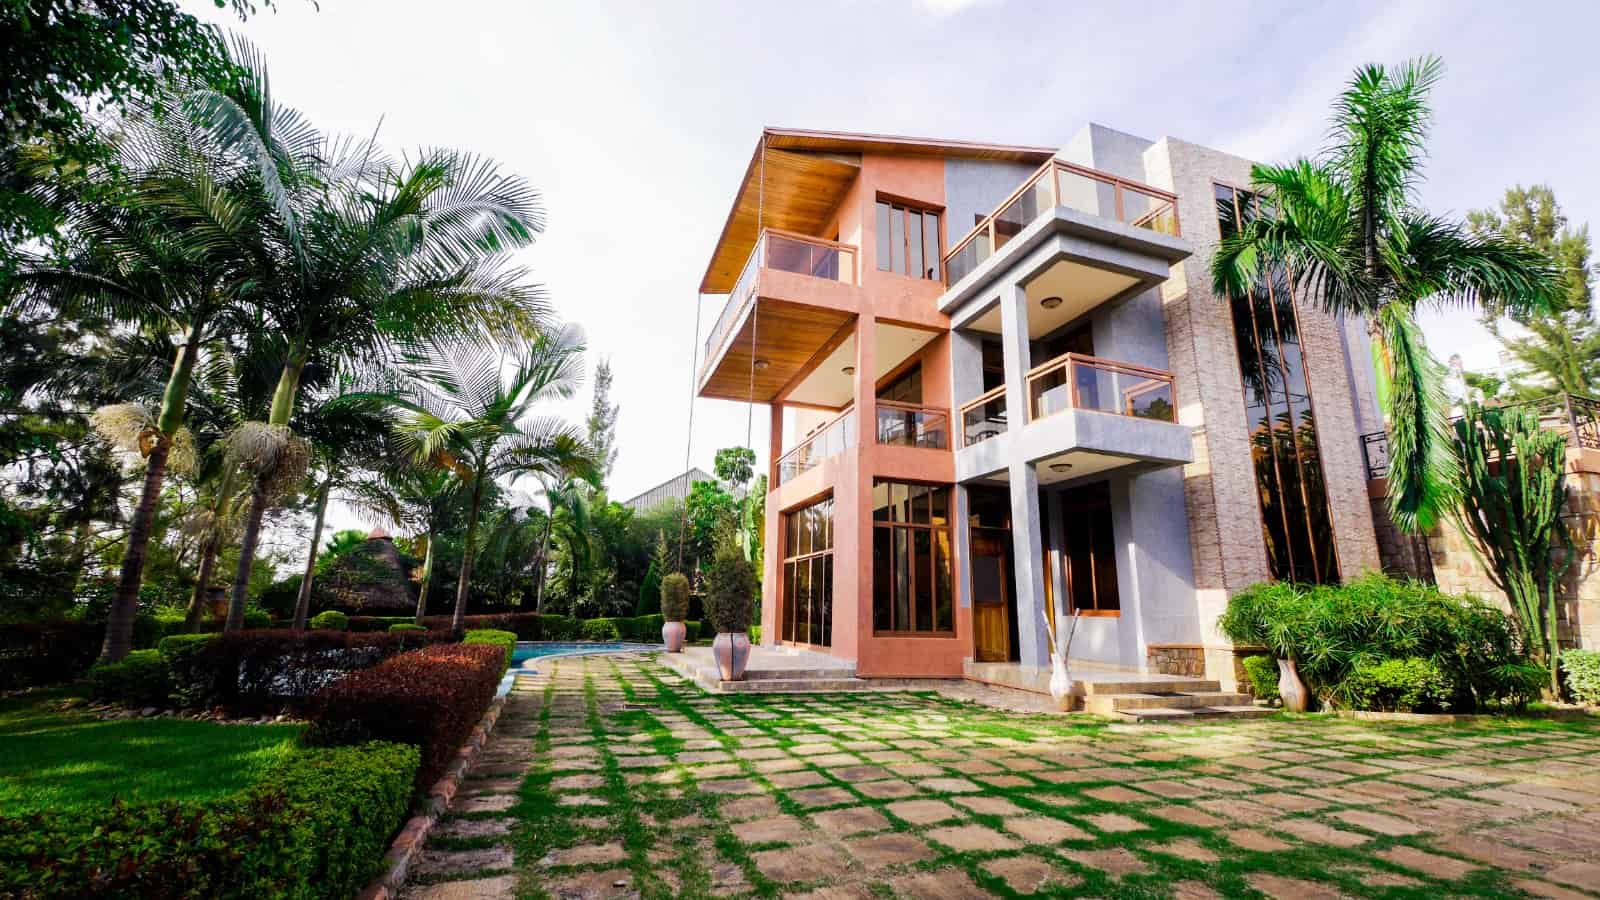 V112 Rebero Rebero very beautiful full furnished house for rent in Kigali Rwanda with swimming poolCall/watsap +250788385831